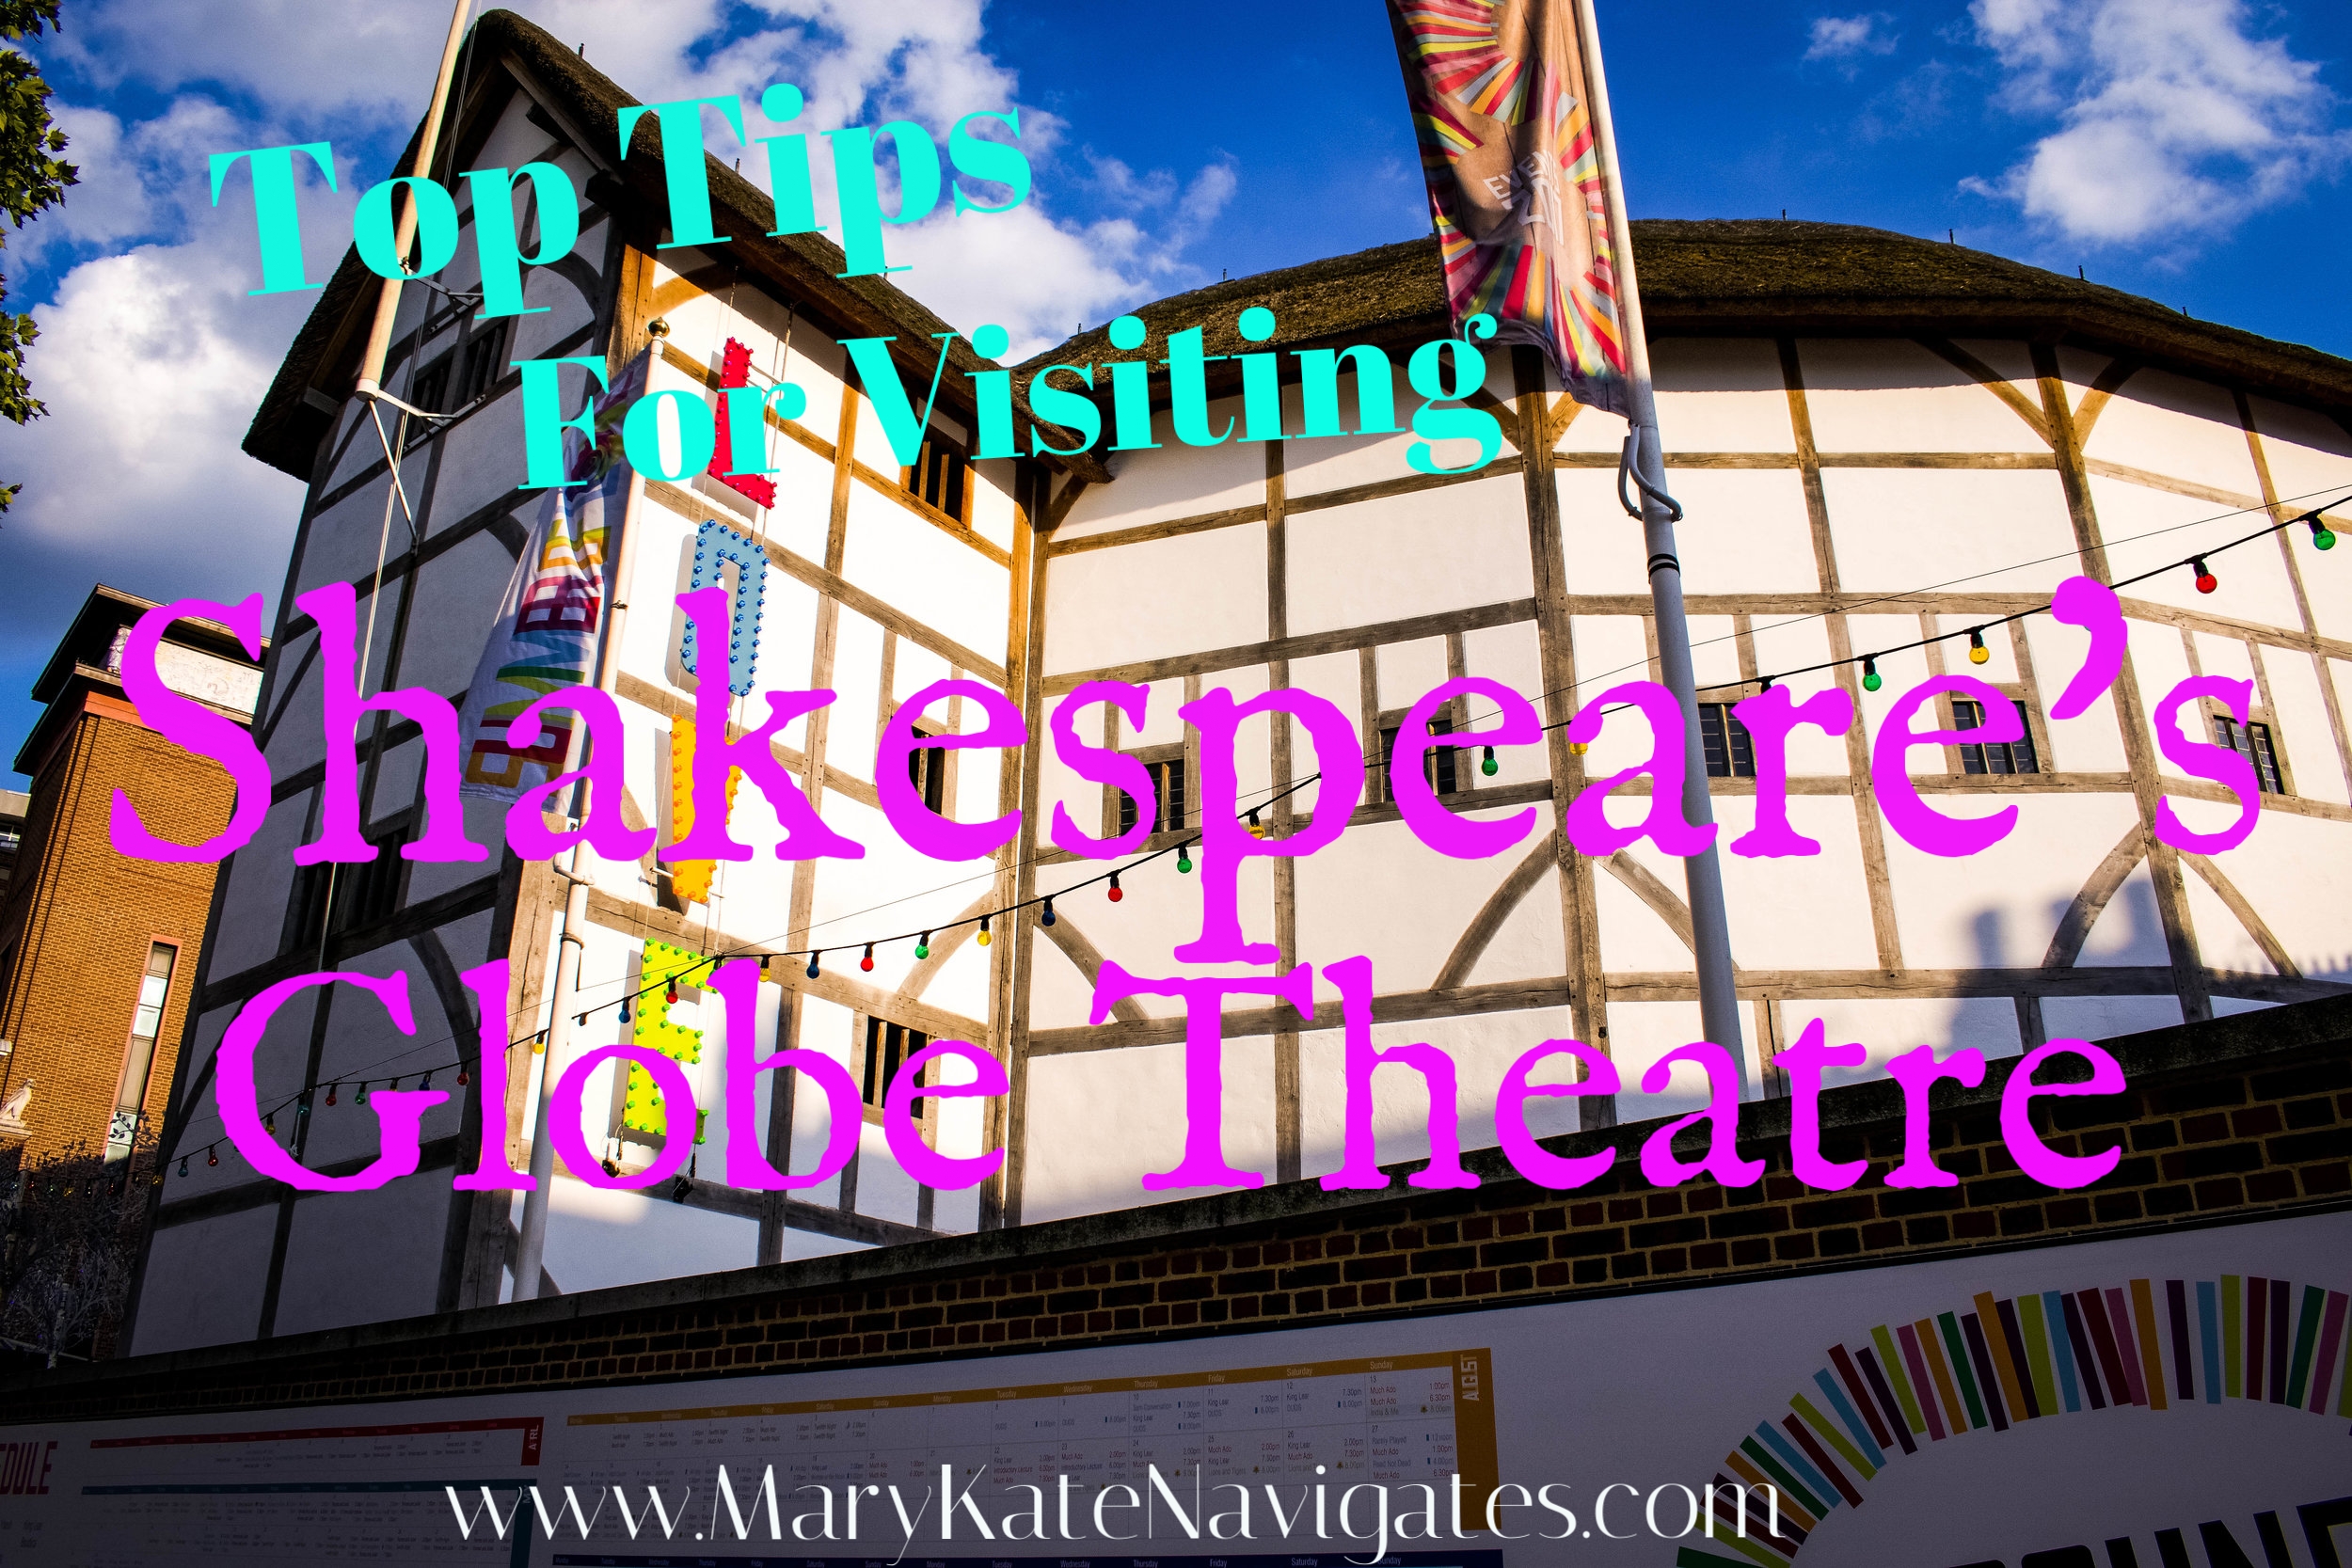 Shakespeare's Globe Theatre ~ London